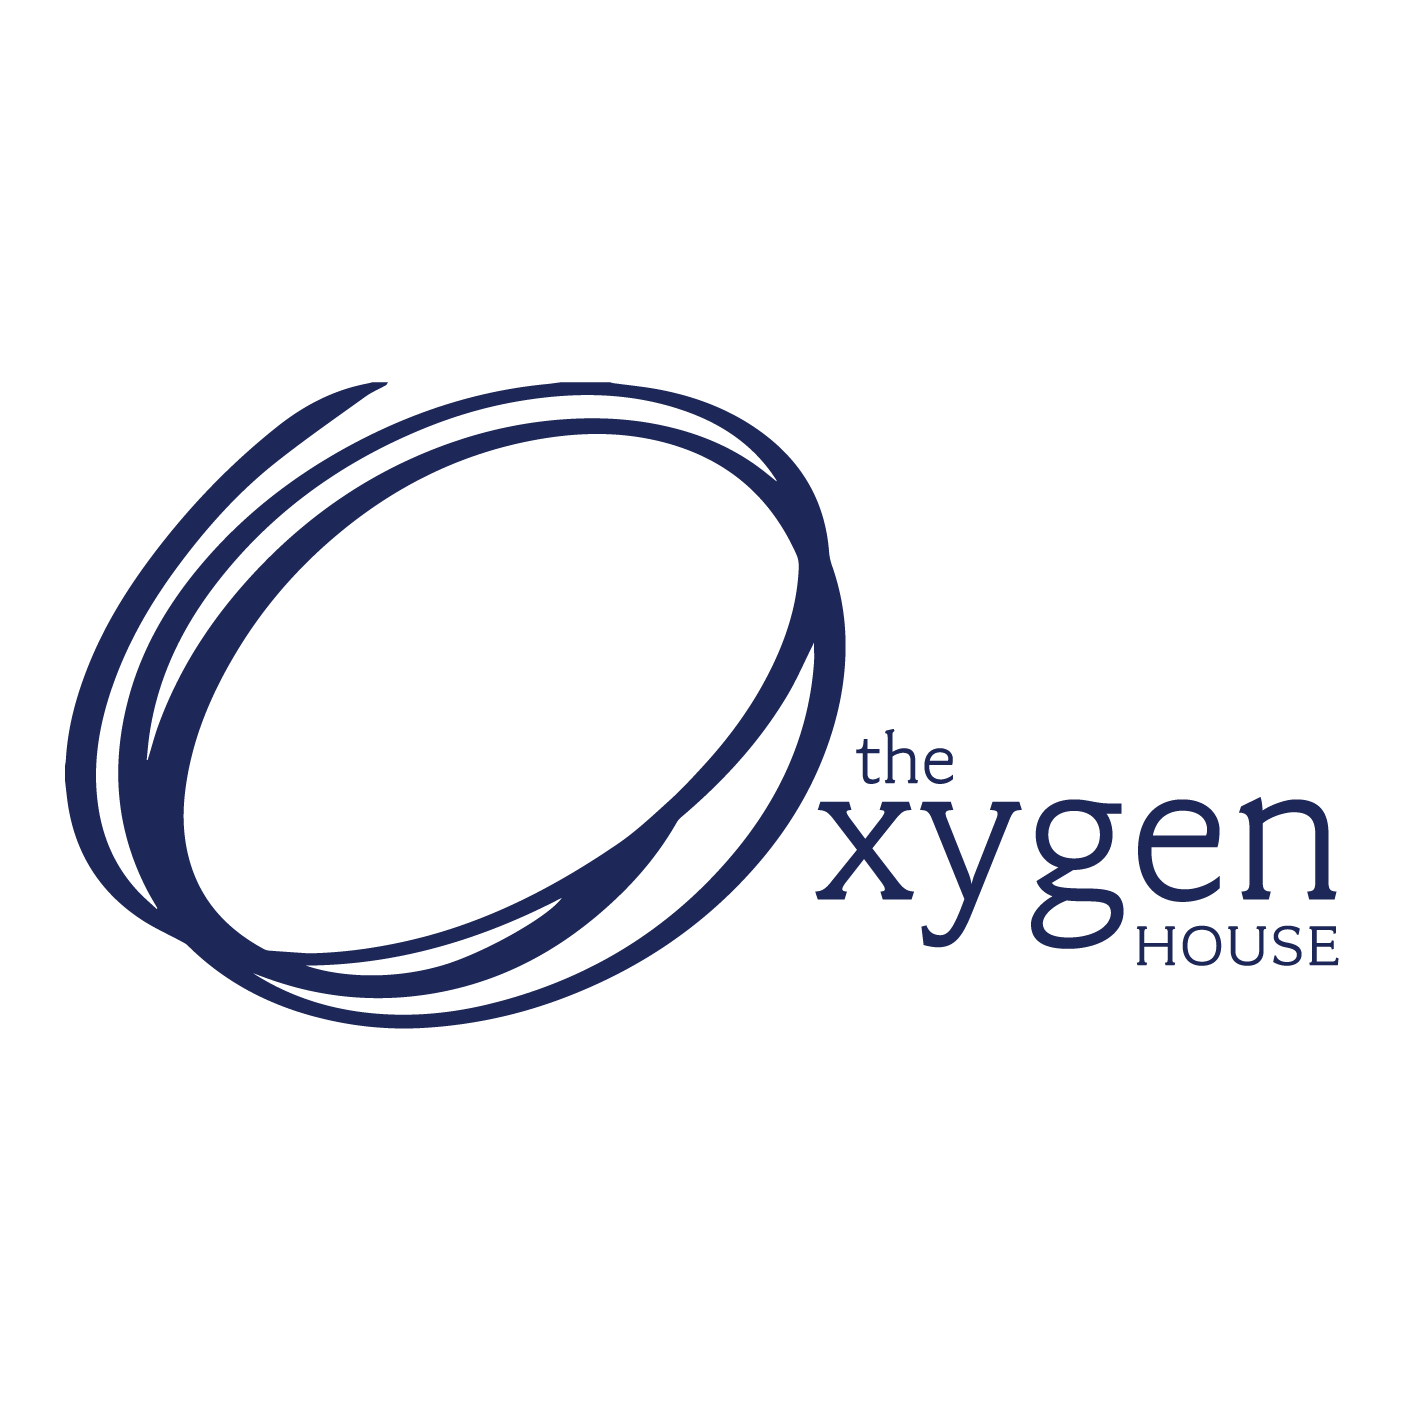 The Oxygen House logo